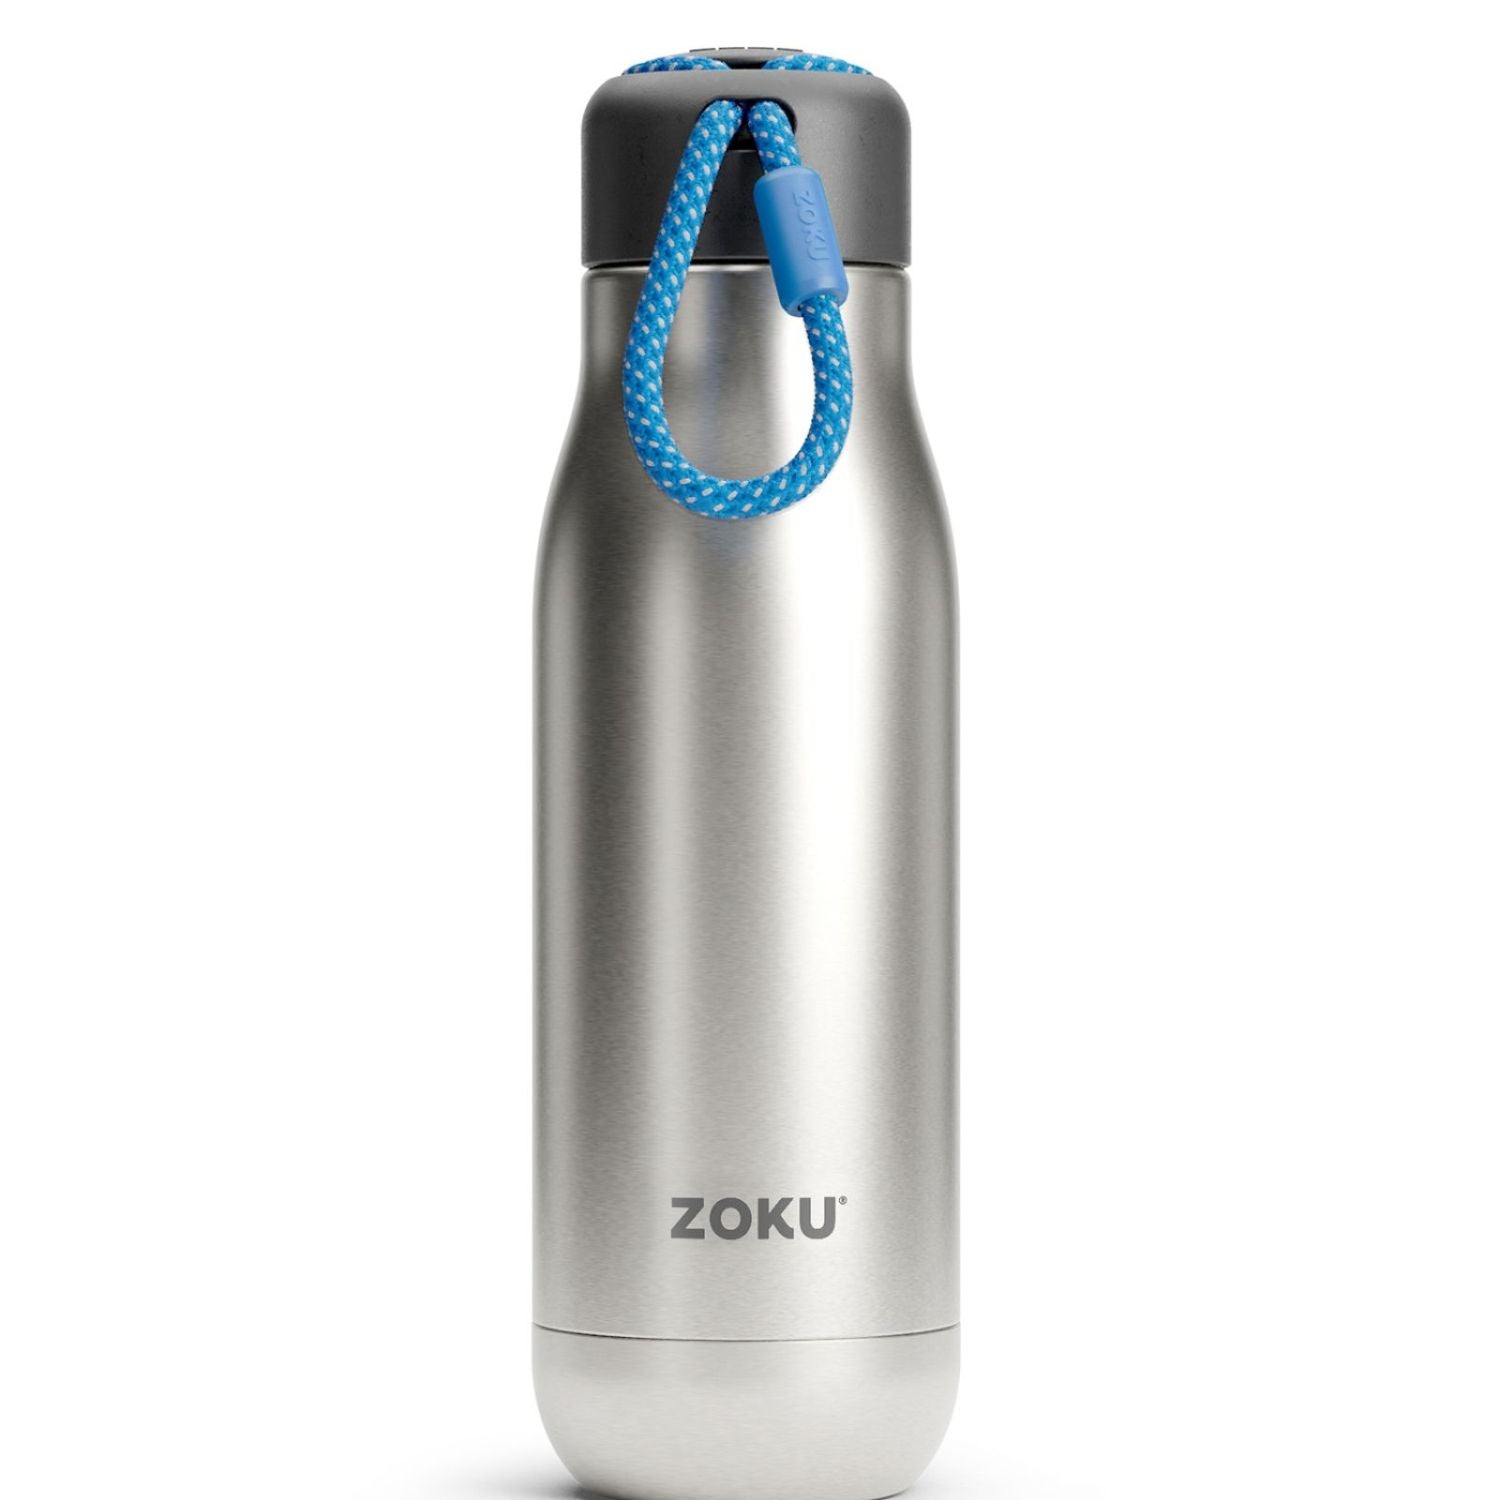 Zoku Stainless Steel Bottle, Silver, 350ml